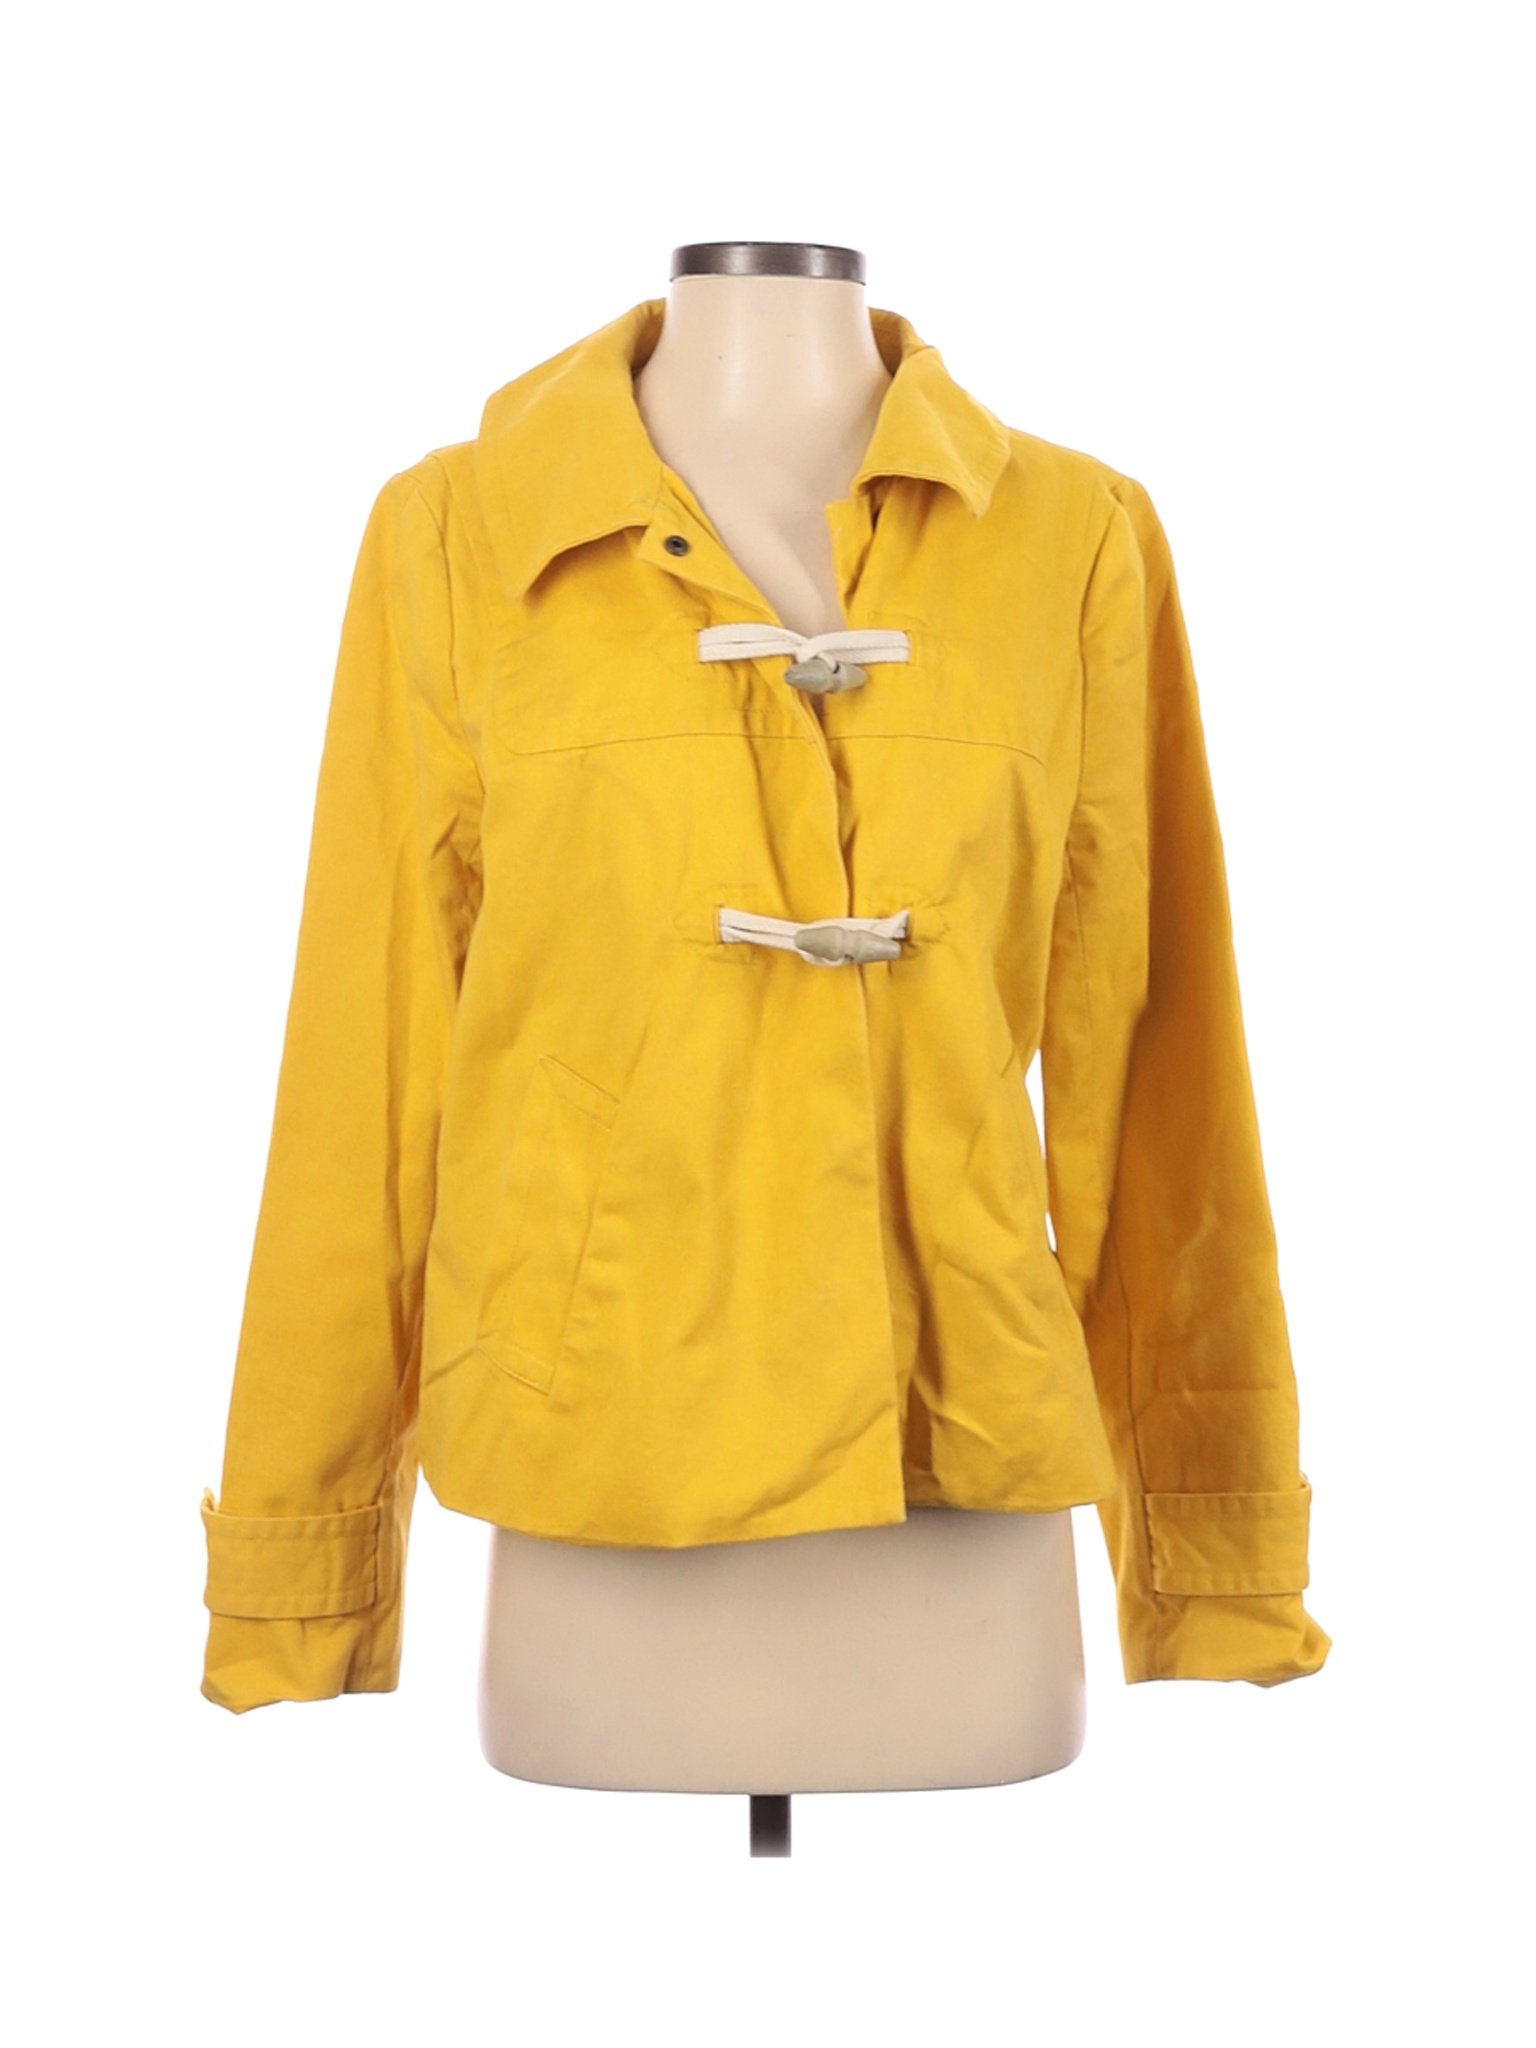 Gap Women Yellow Jacket M | eBay